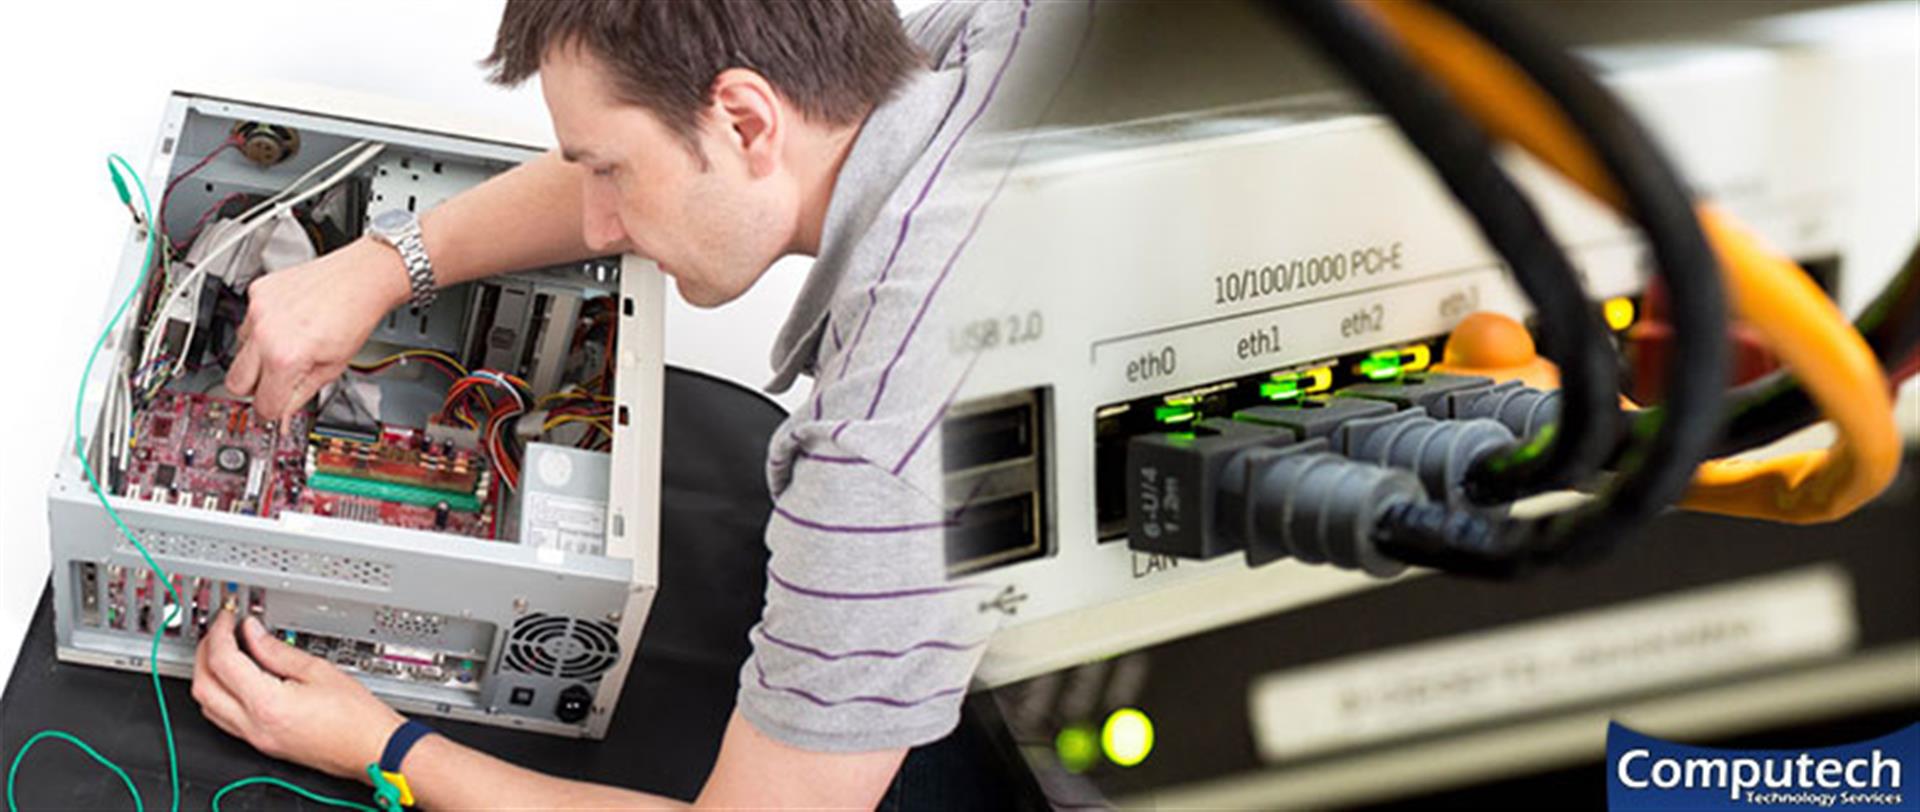 Bessemer Alabama On-Site PC & Printer Repair, Networking, Telecom & Data Wiring Services